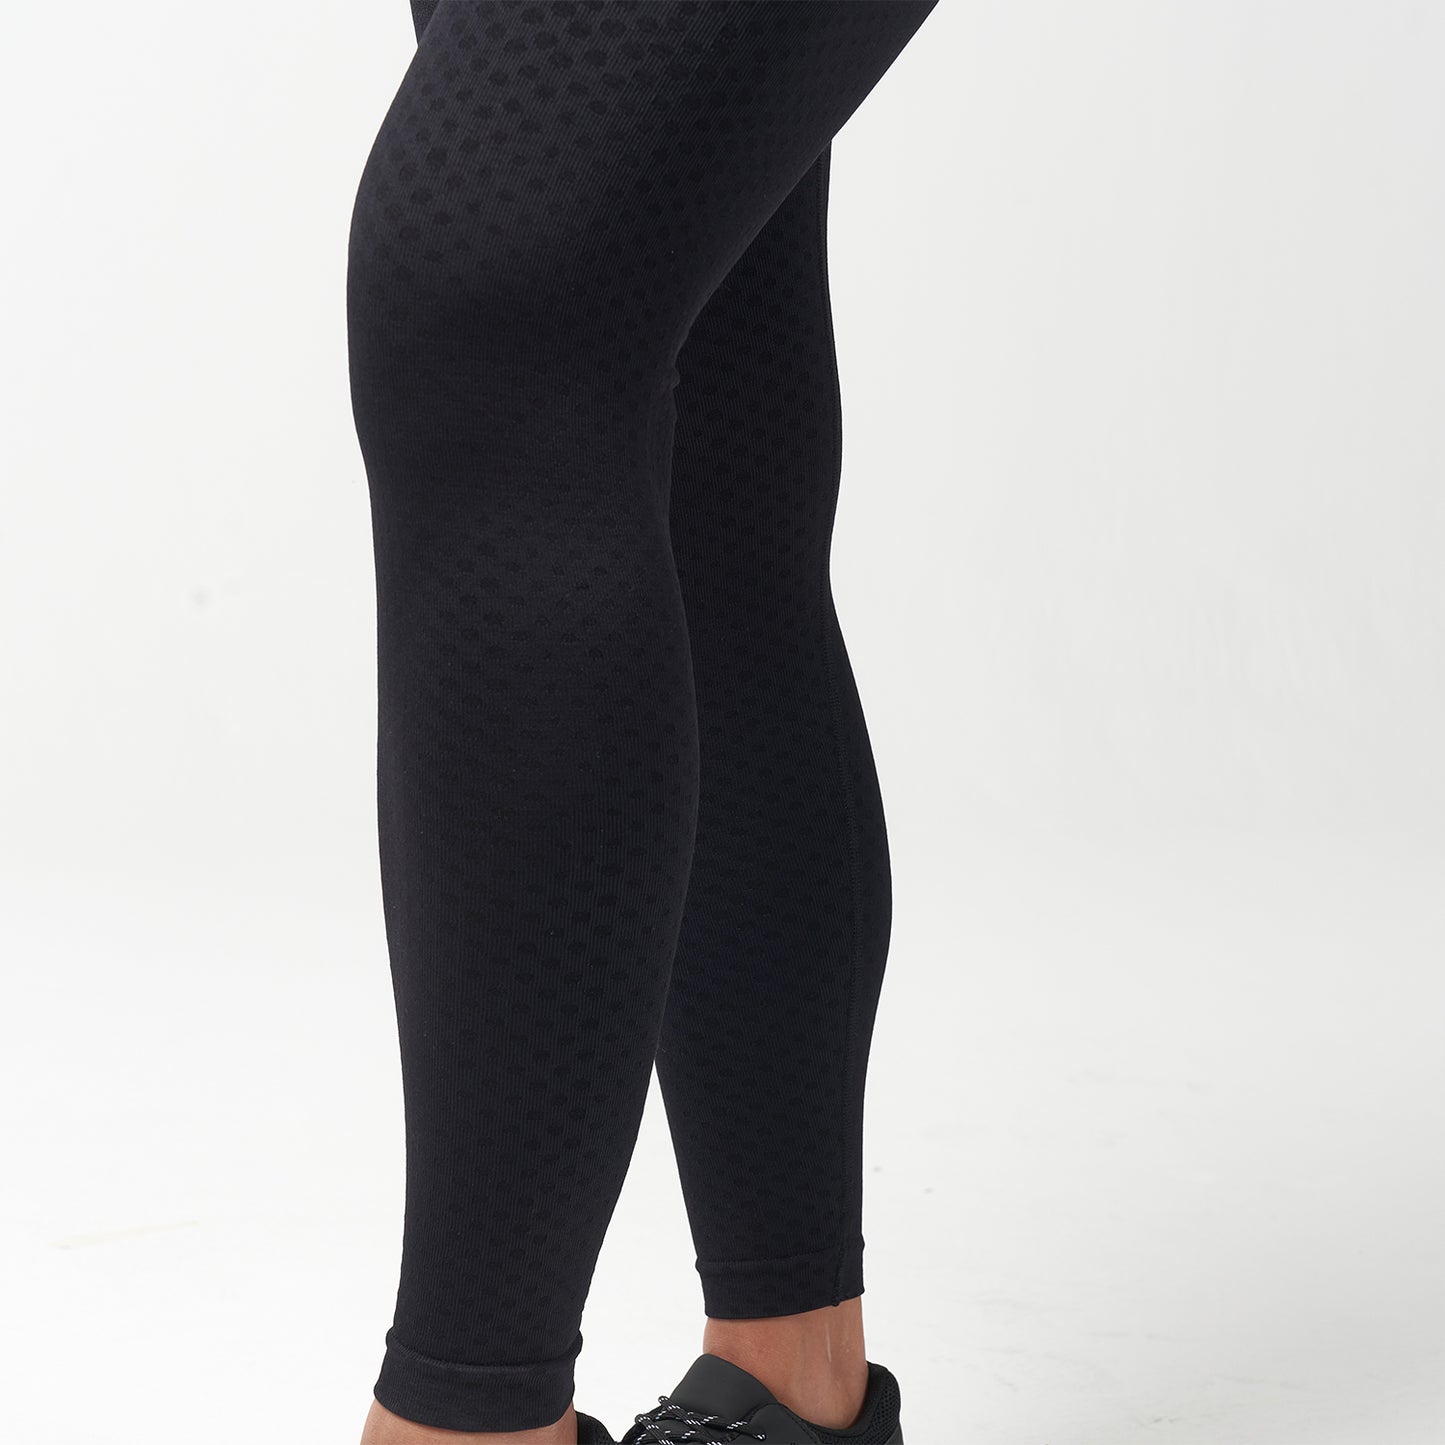 squatwolf-workout-clothes-lab360-camo-seamless-leggings-black-gym-leggings-for-women